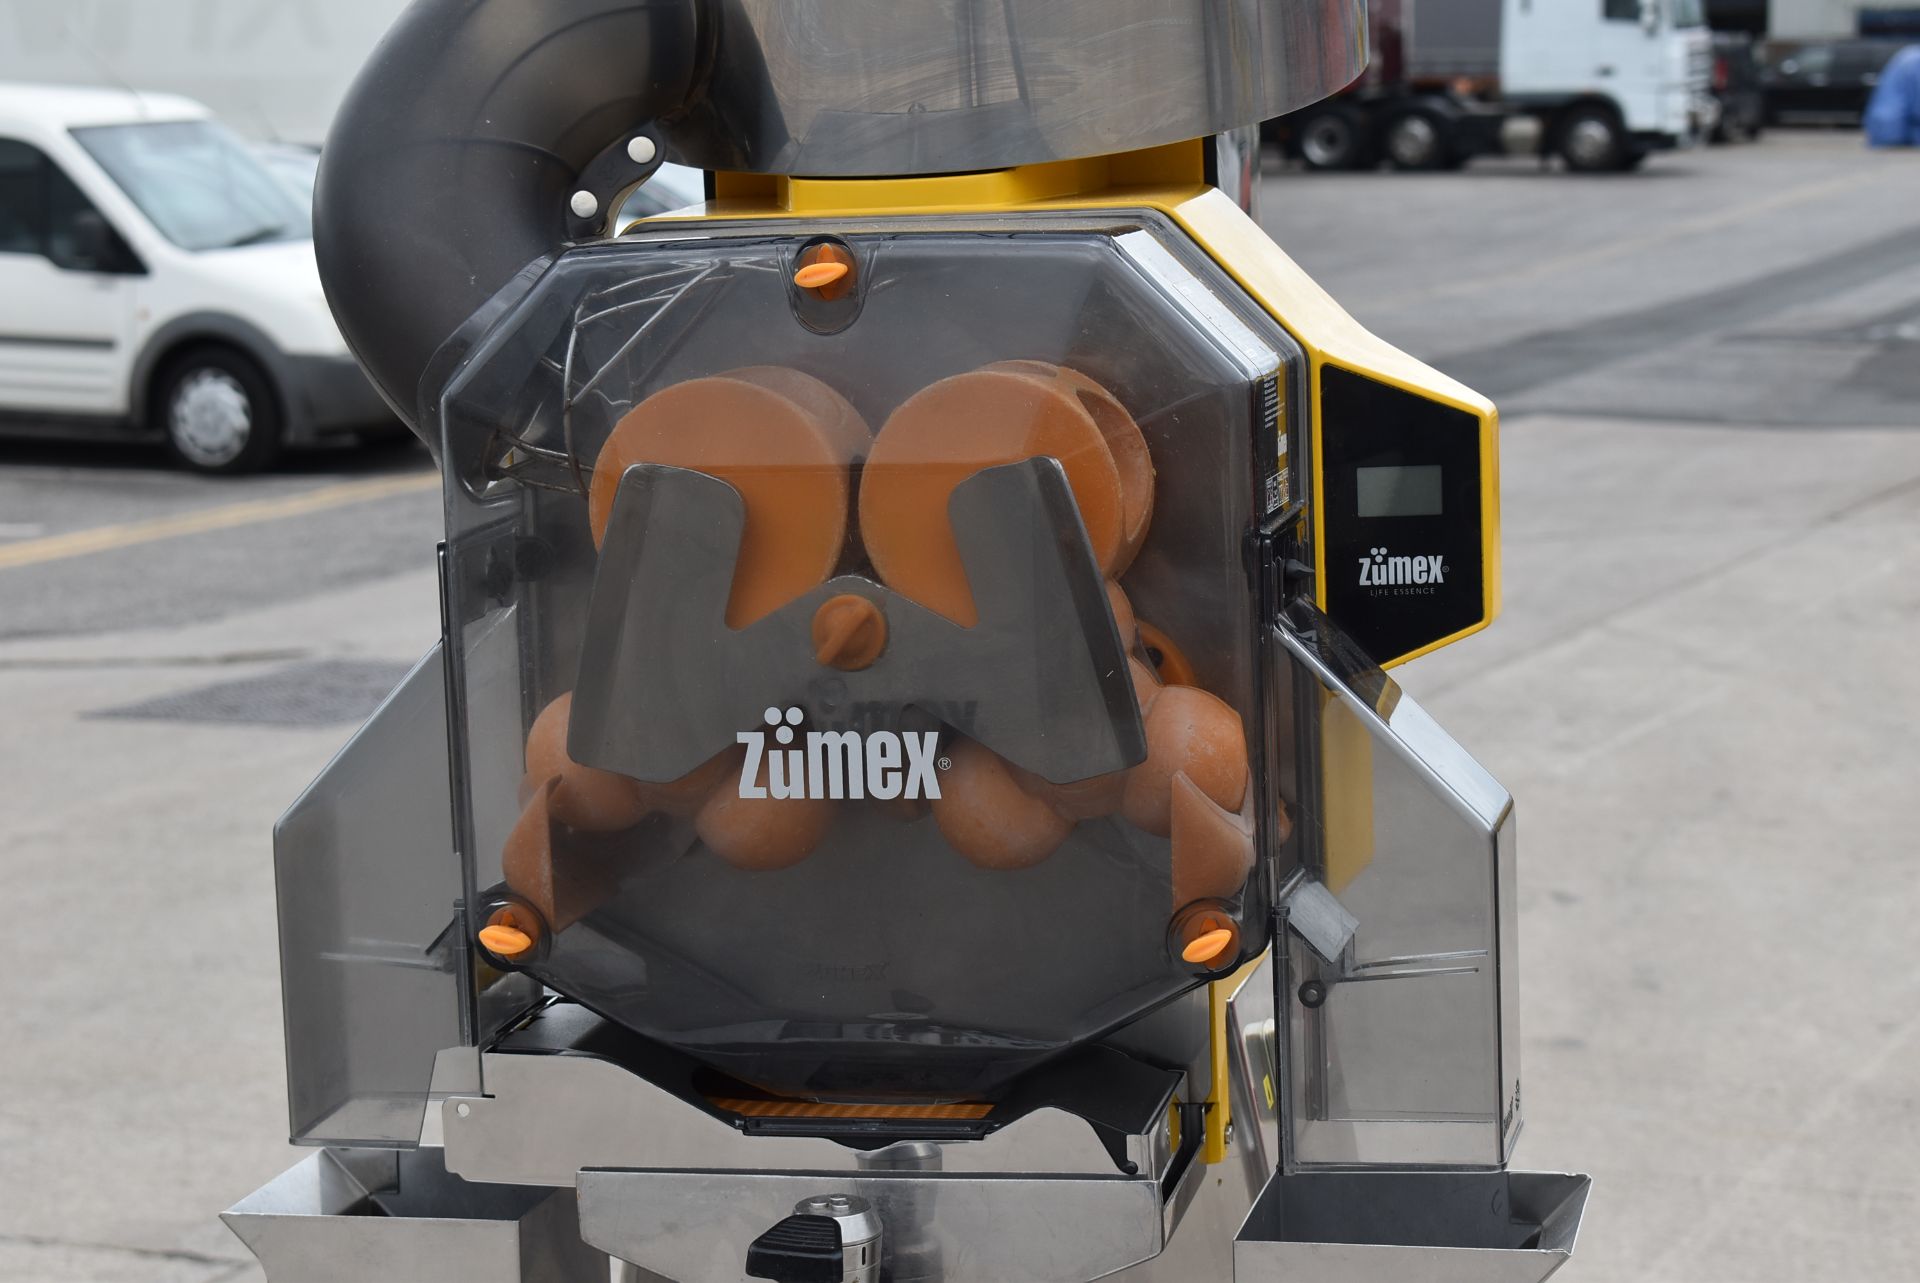 1 x Zumex Speed S +Plus Self-Service Podium Commercial Citrus Juicer - Manufactured in 2018 - - Image 5 of 5